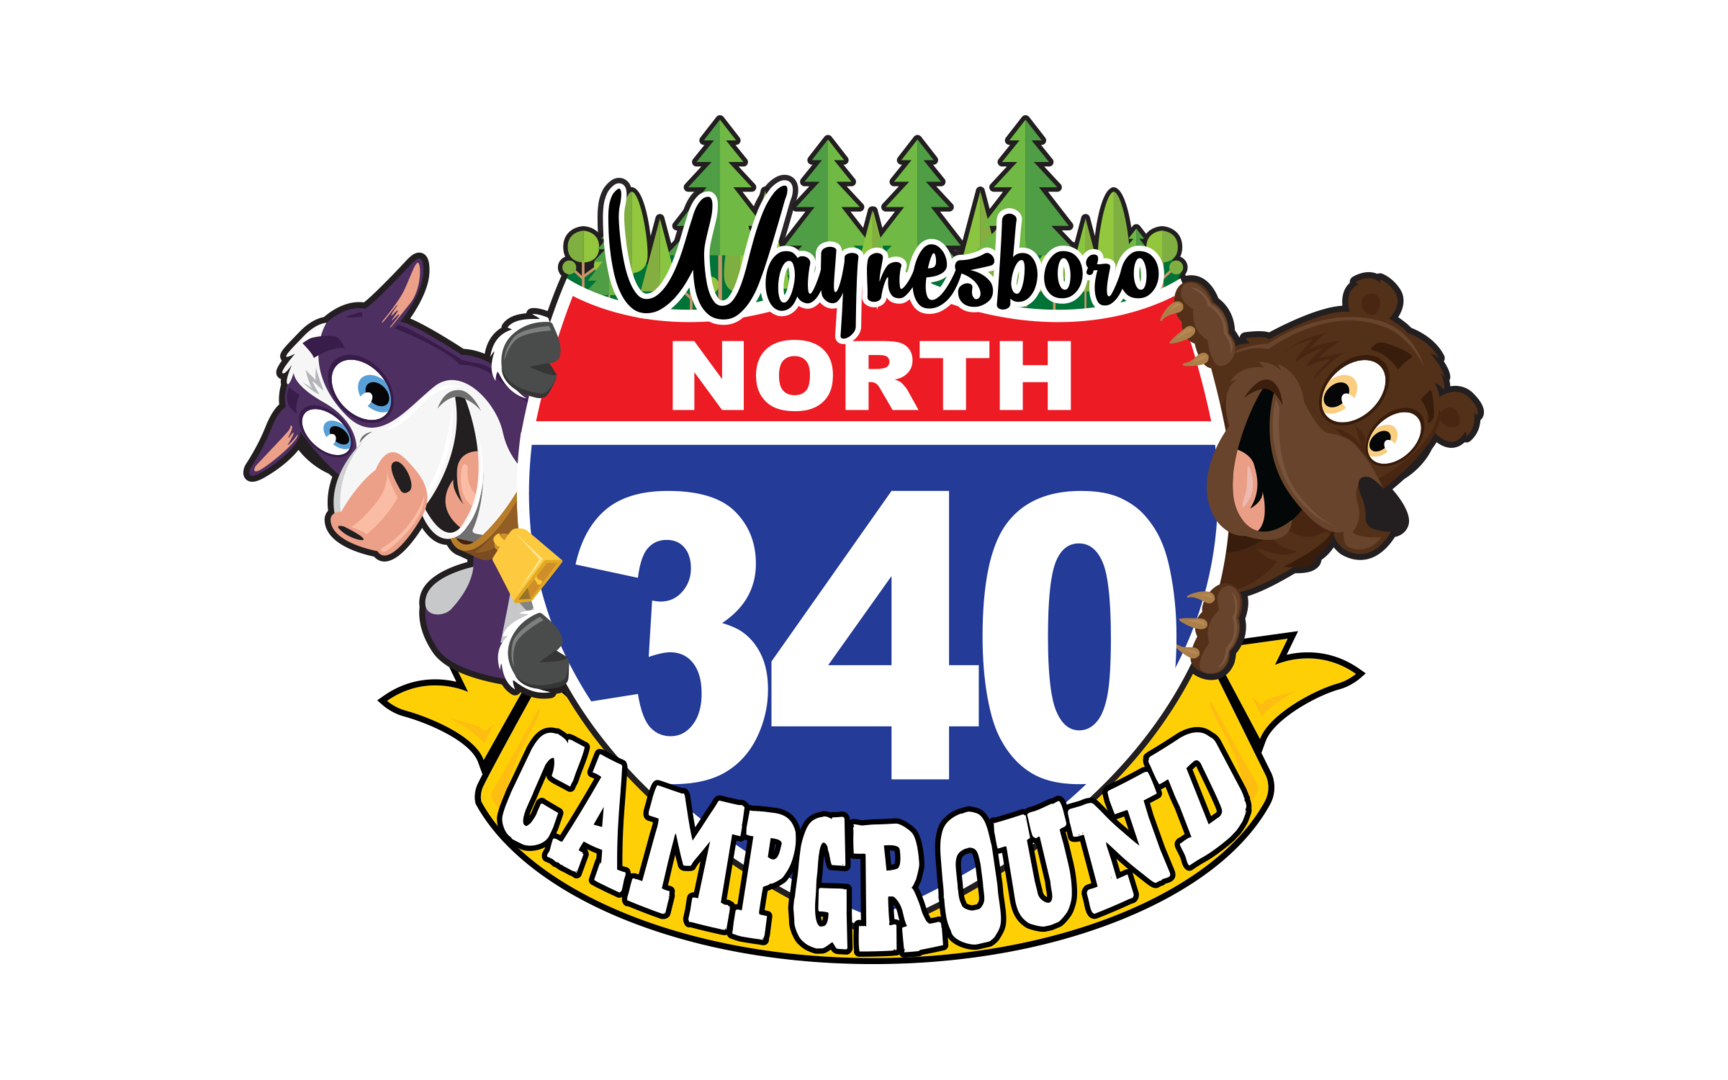 waynesboro north 340 campground logo with cow and bear